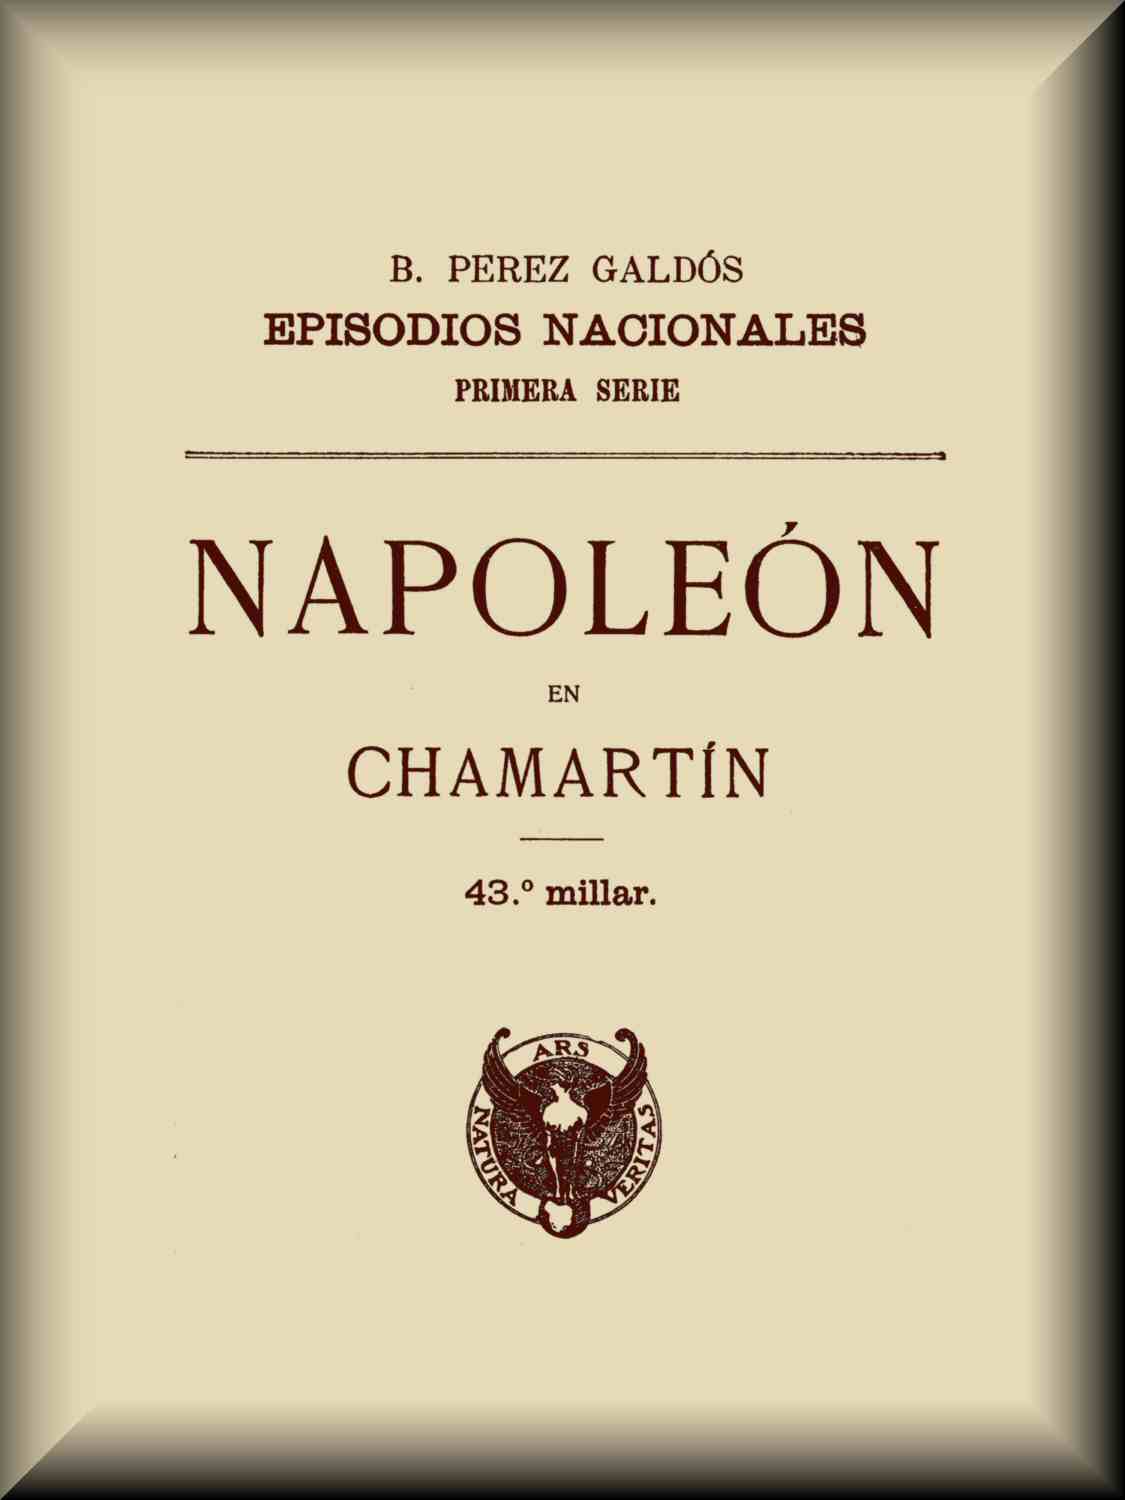 Napoleón en Chamartín, by Benito Pérez Galdós—A Project Gutenberg eBook